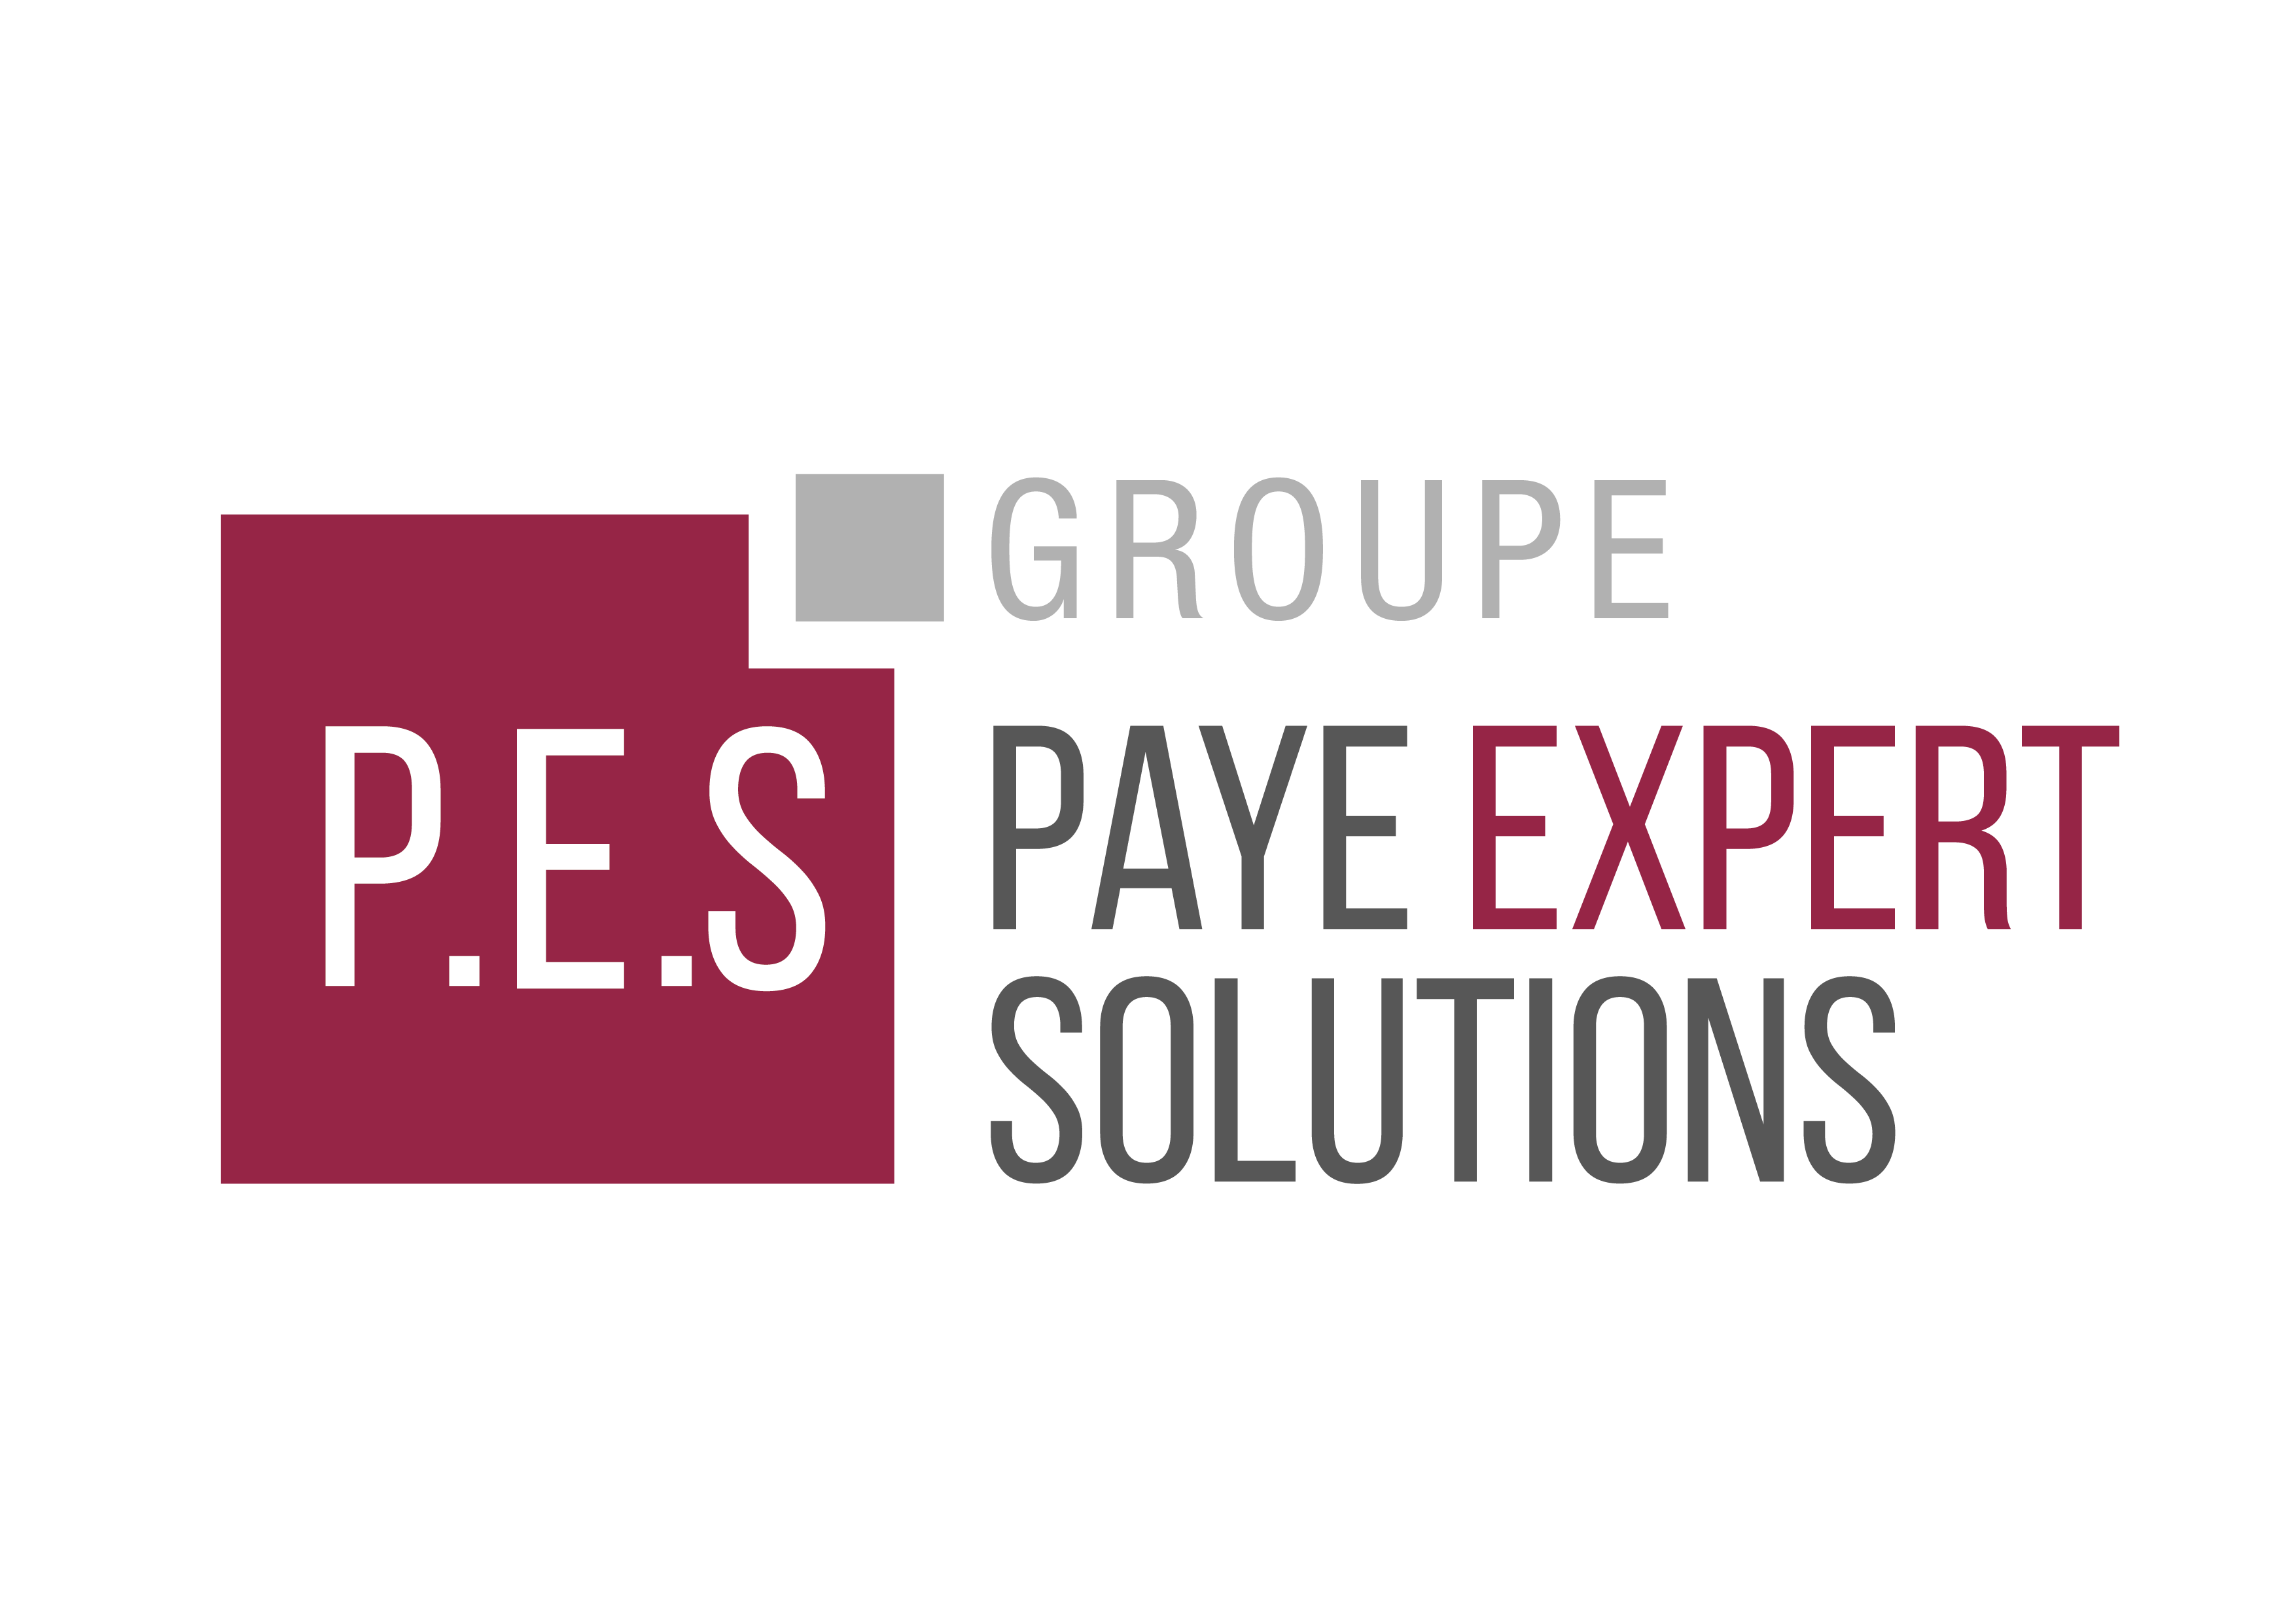 logo groupe paye expert solutions externalisation de paie